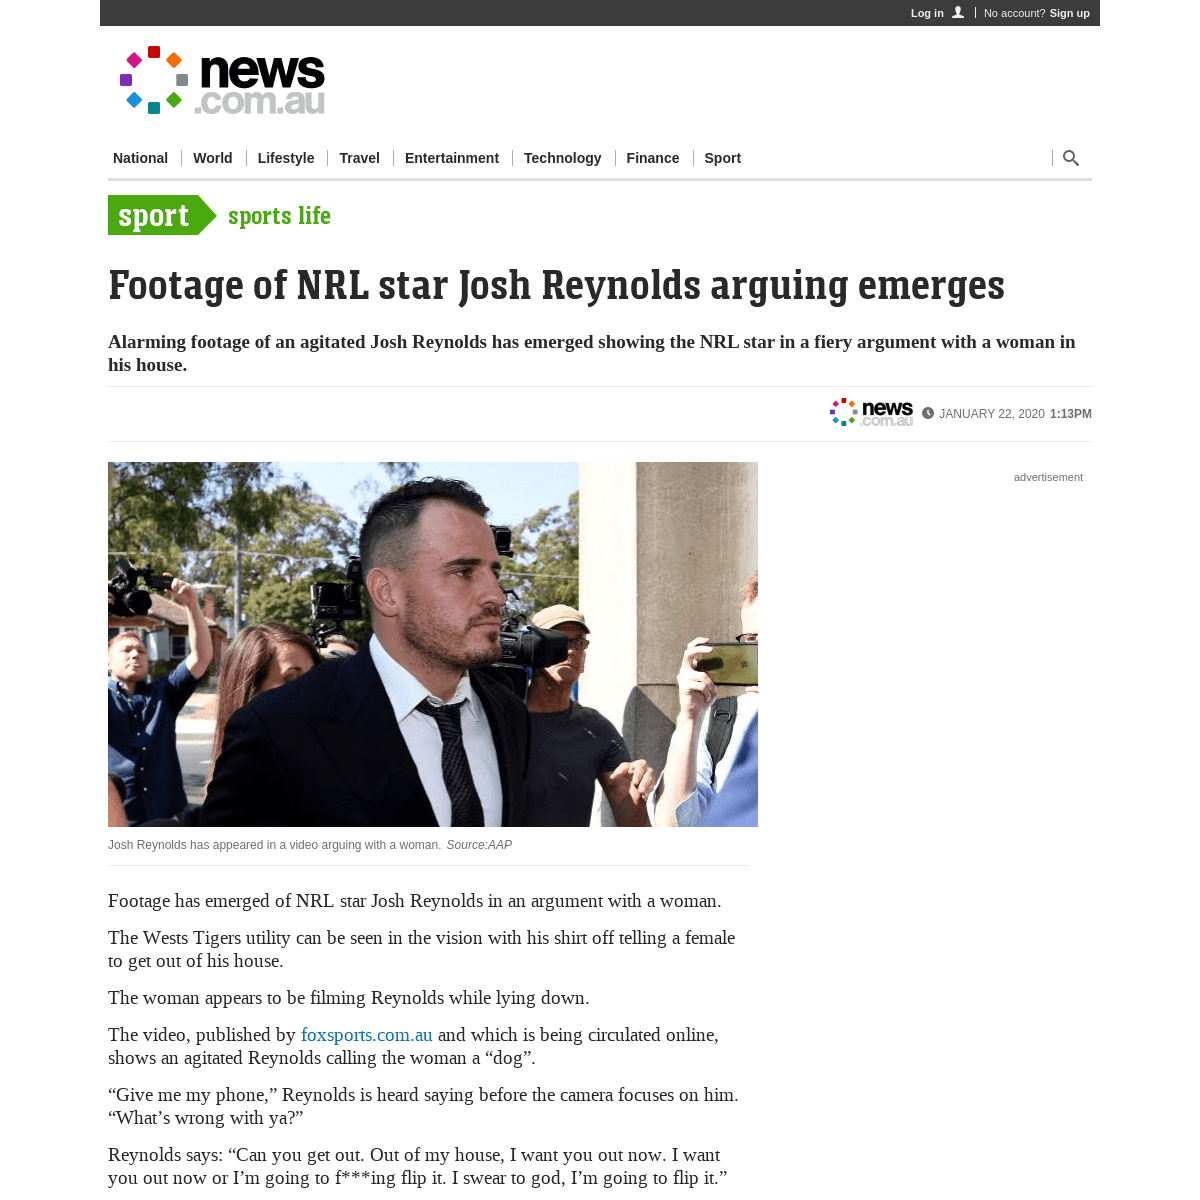 A complete backup of www.news.com.au/sport/sports-life/alarming-footage-of-nrl-star-josh-reynolds-emerges/news-story/6420e08fce1